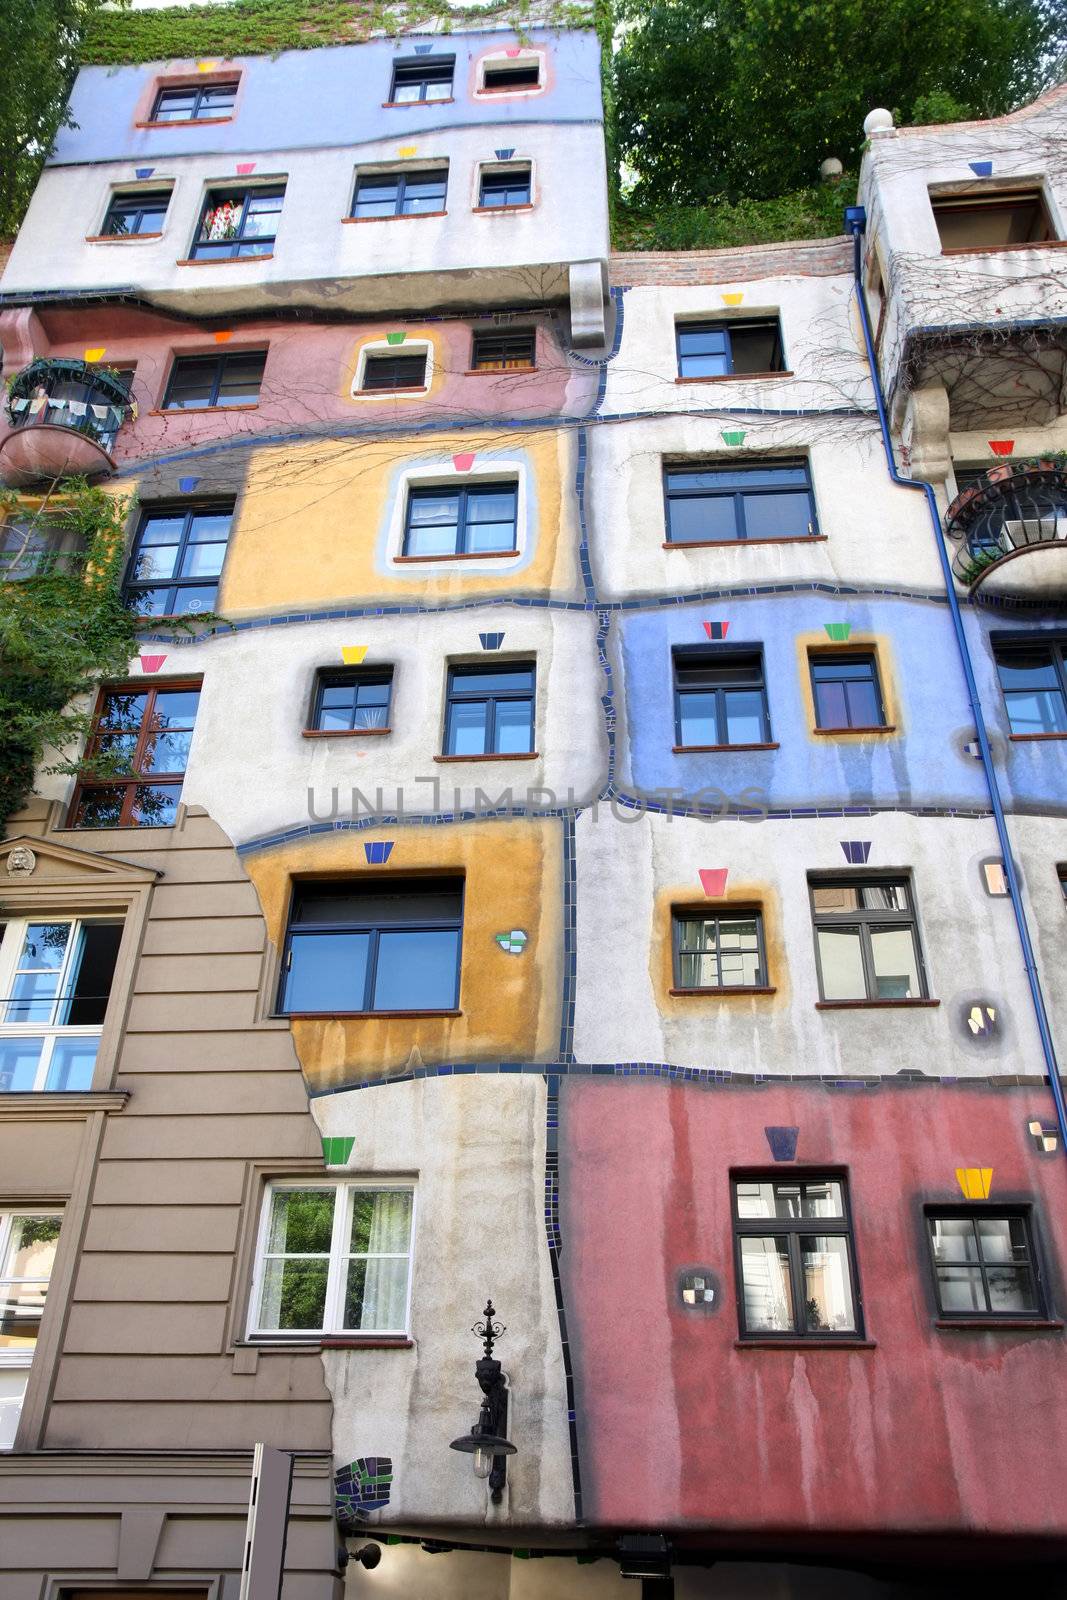 Colourful Facade of the Hundertwasser House in Vienna, Austria